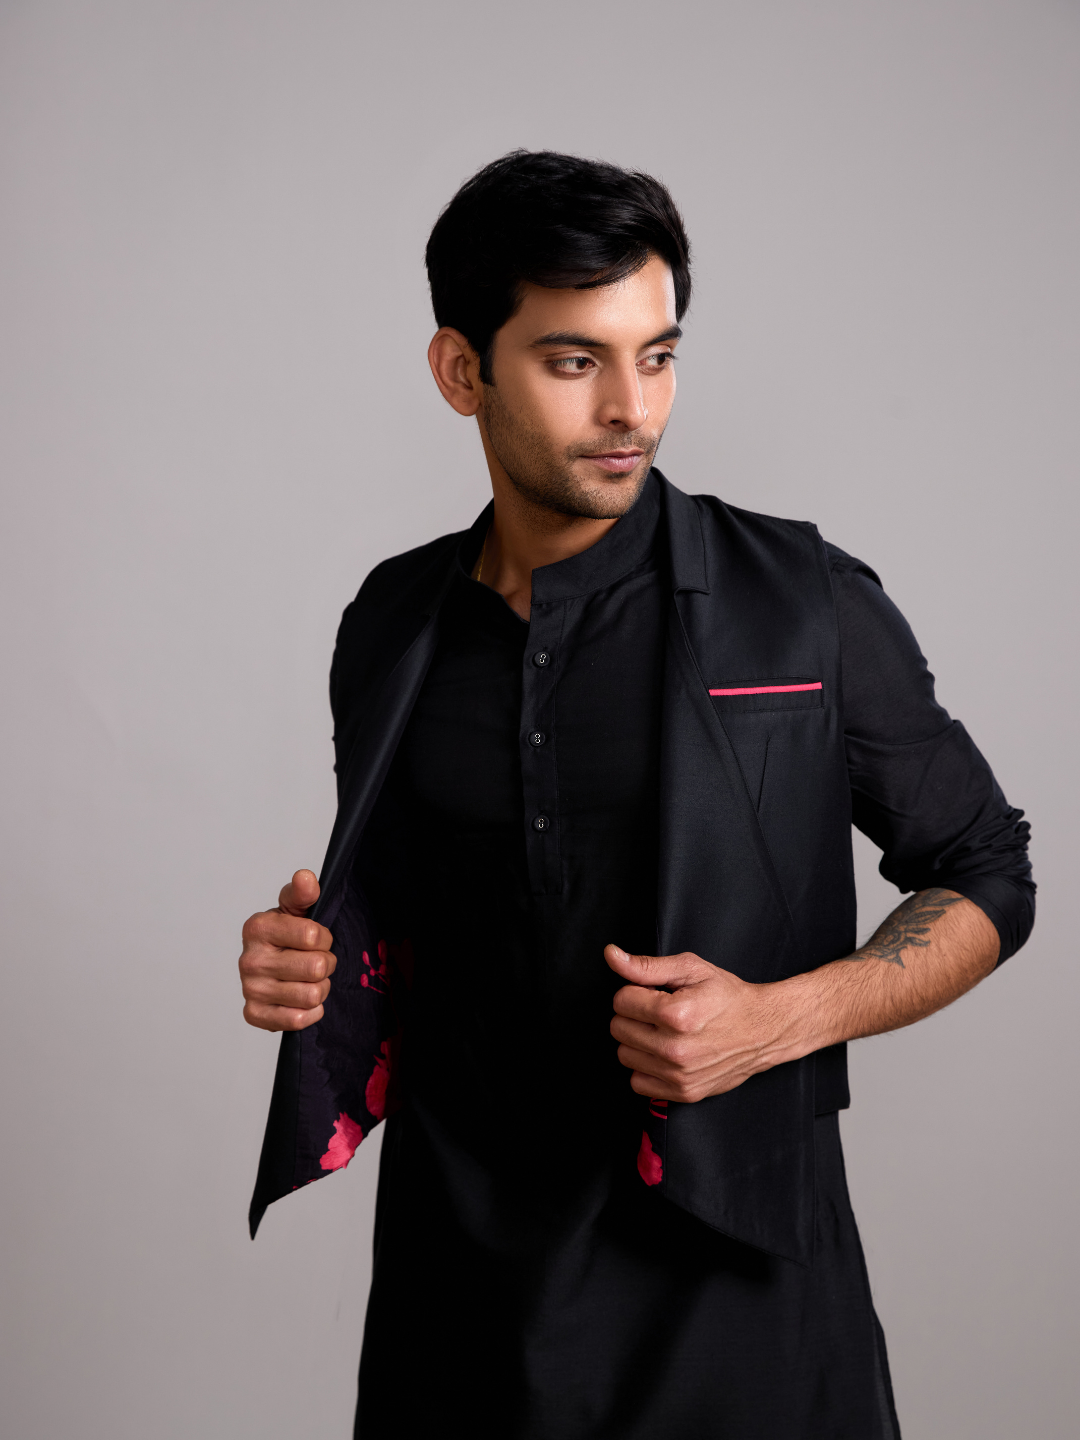 Gulmohar overlapped jacket with mandarin collar straight kurta paired with Straight pants- Rich black